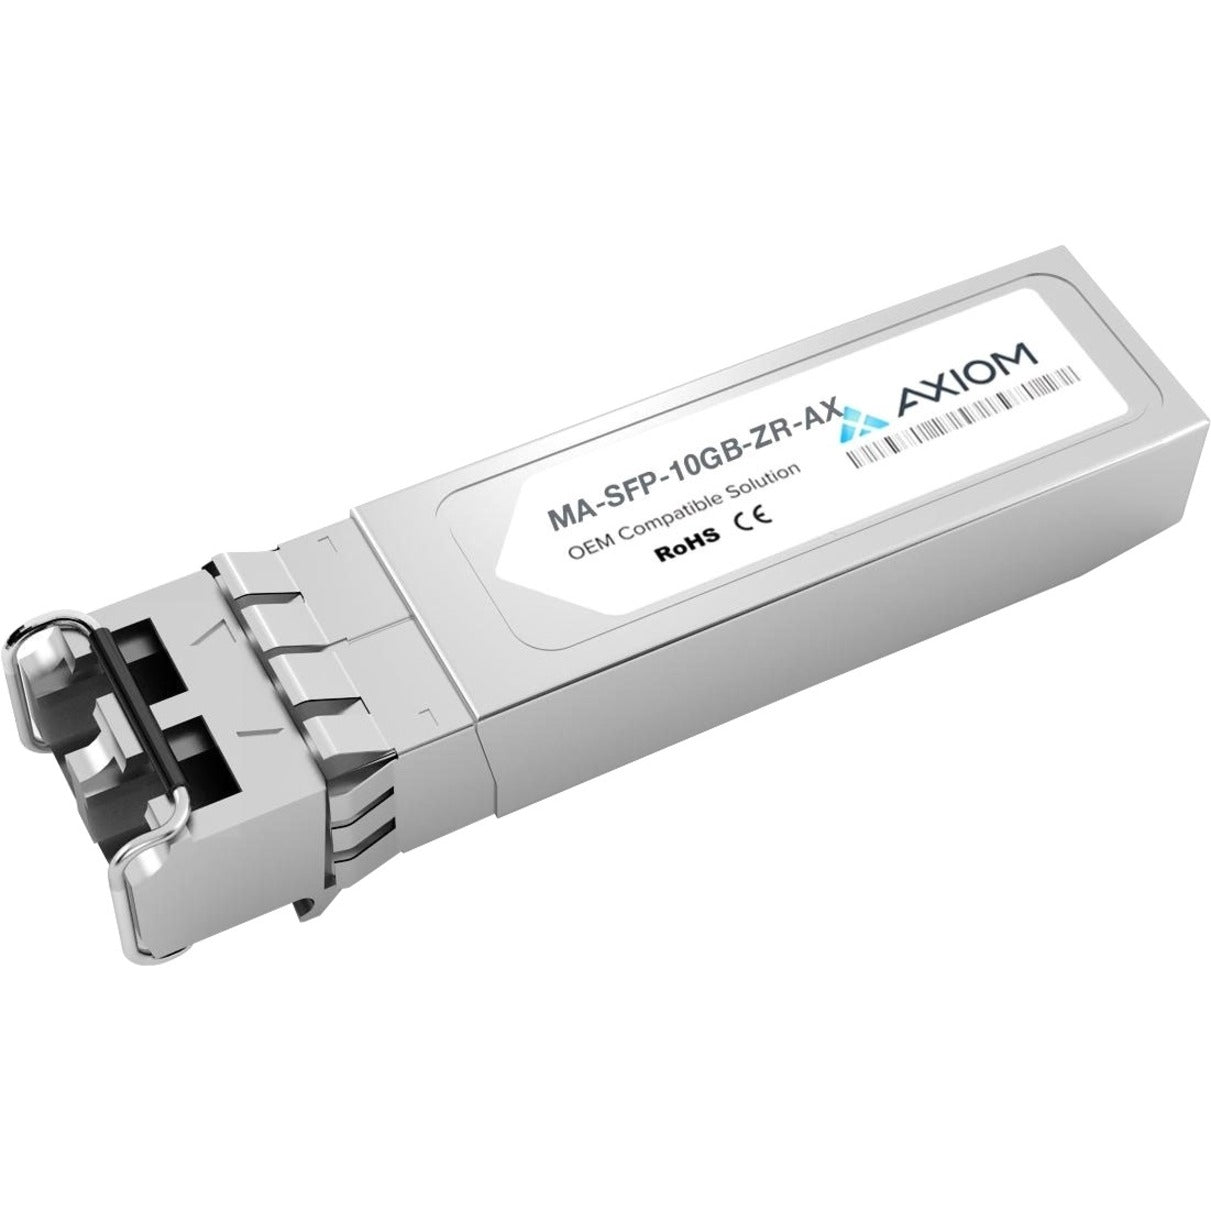 Axiom MA-SFP-10GB-ZR-AX 10GBASE-ZR SFP+ Transceiver for Meraki, High-Speed Optical Network Solution